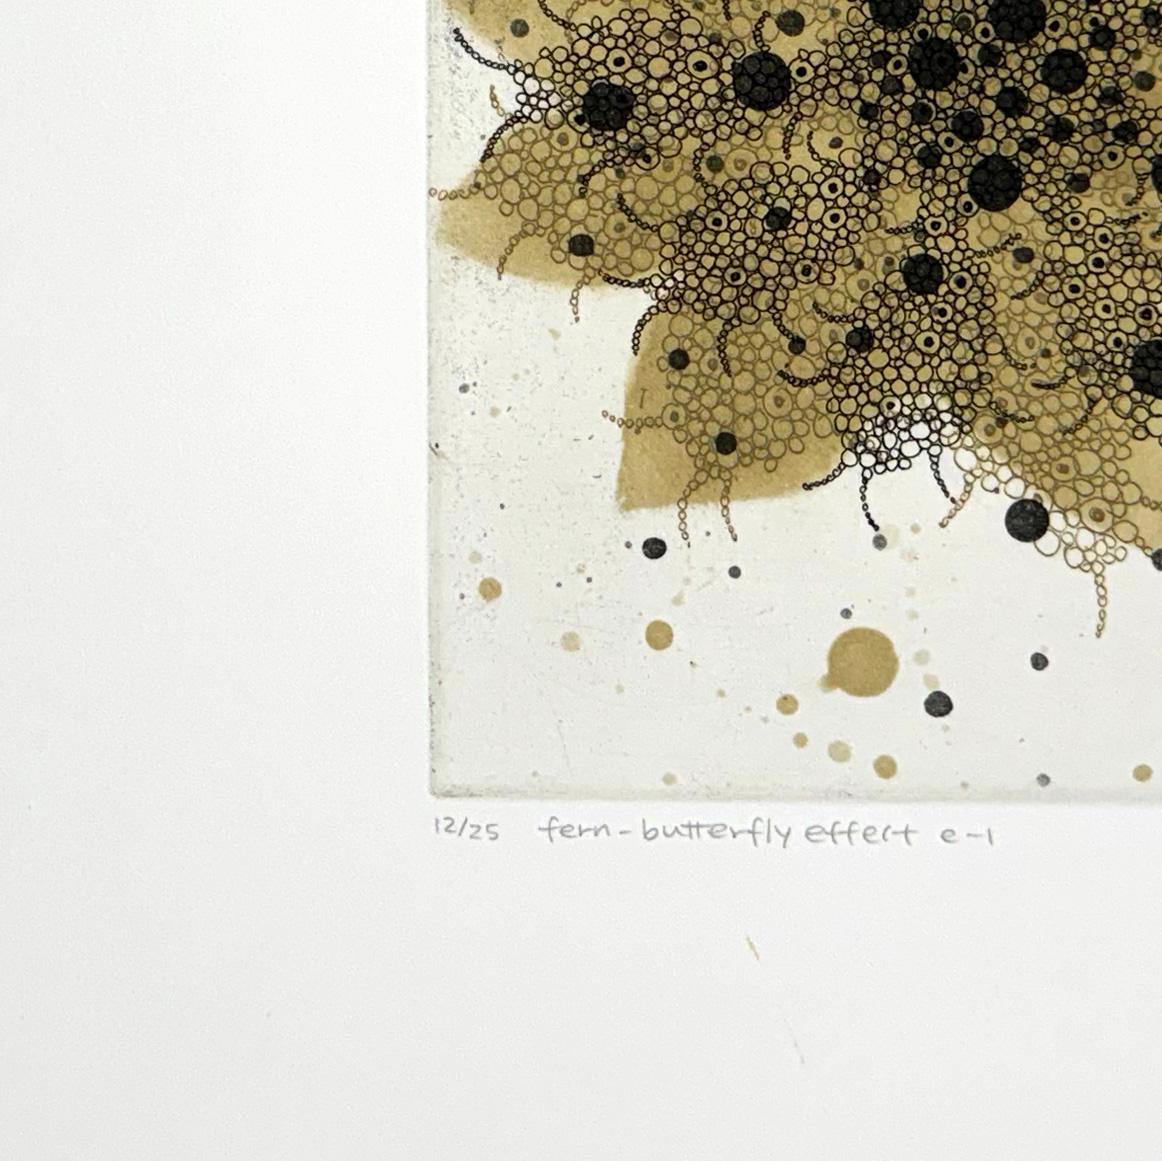 fern-butterfly effect  e-1 - Abstract Geometric Print by Seiko Tachibana